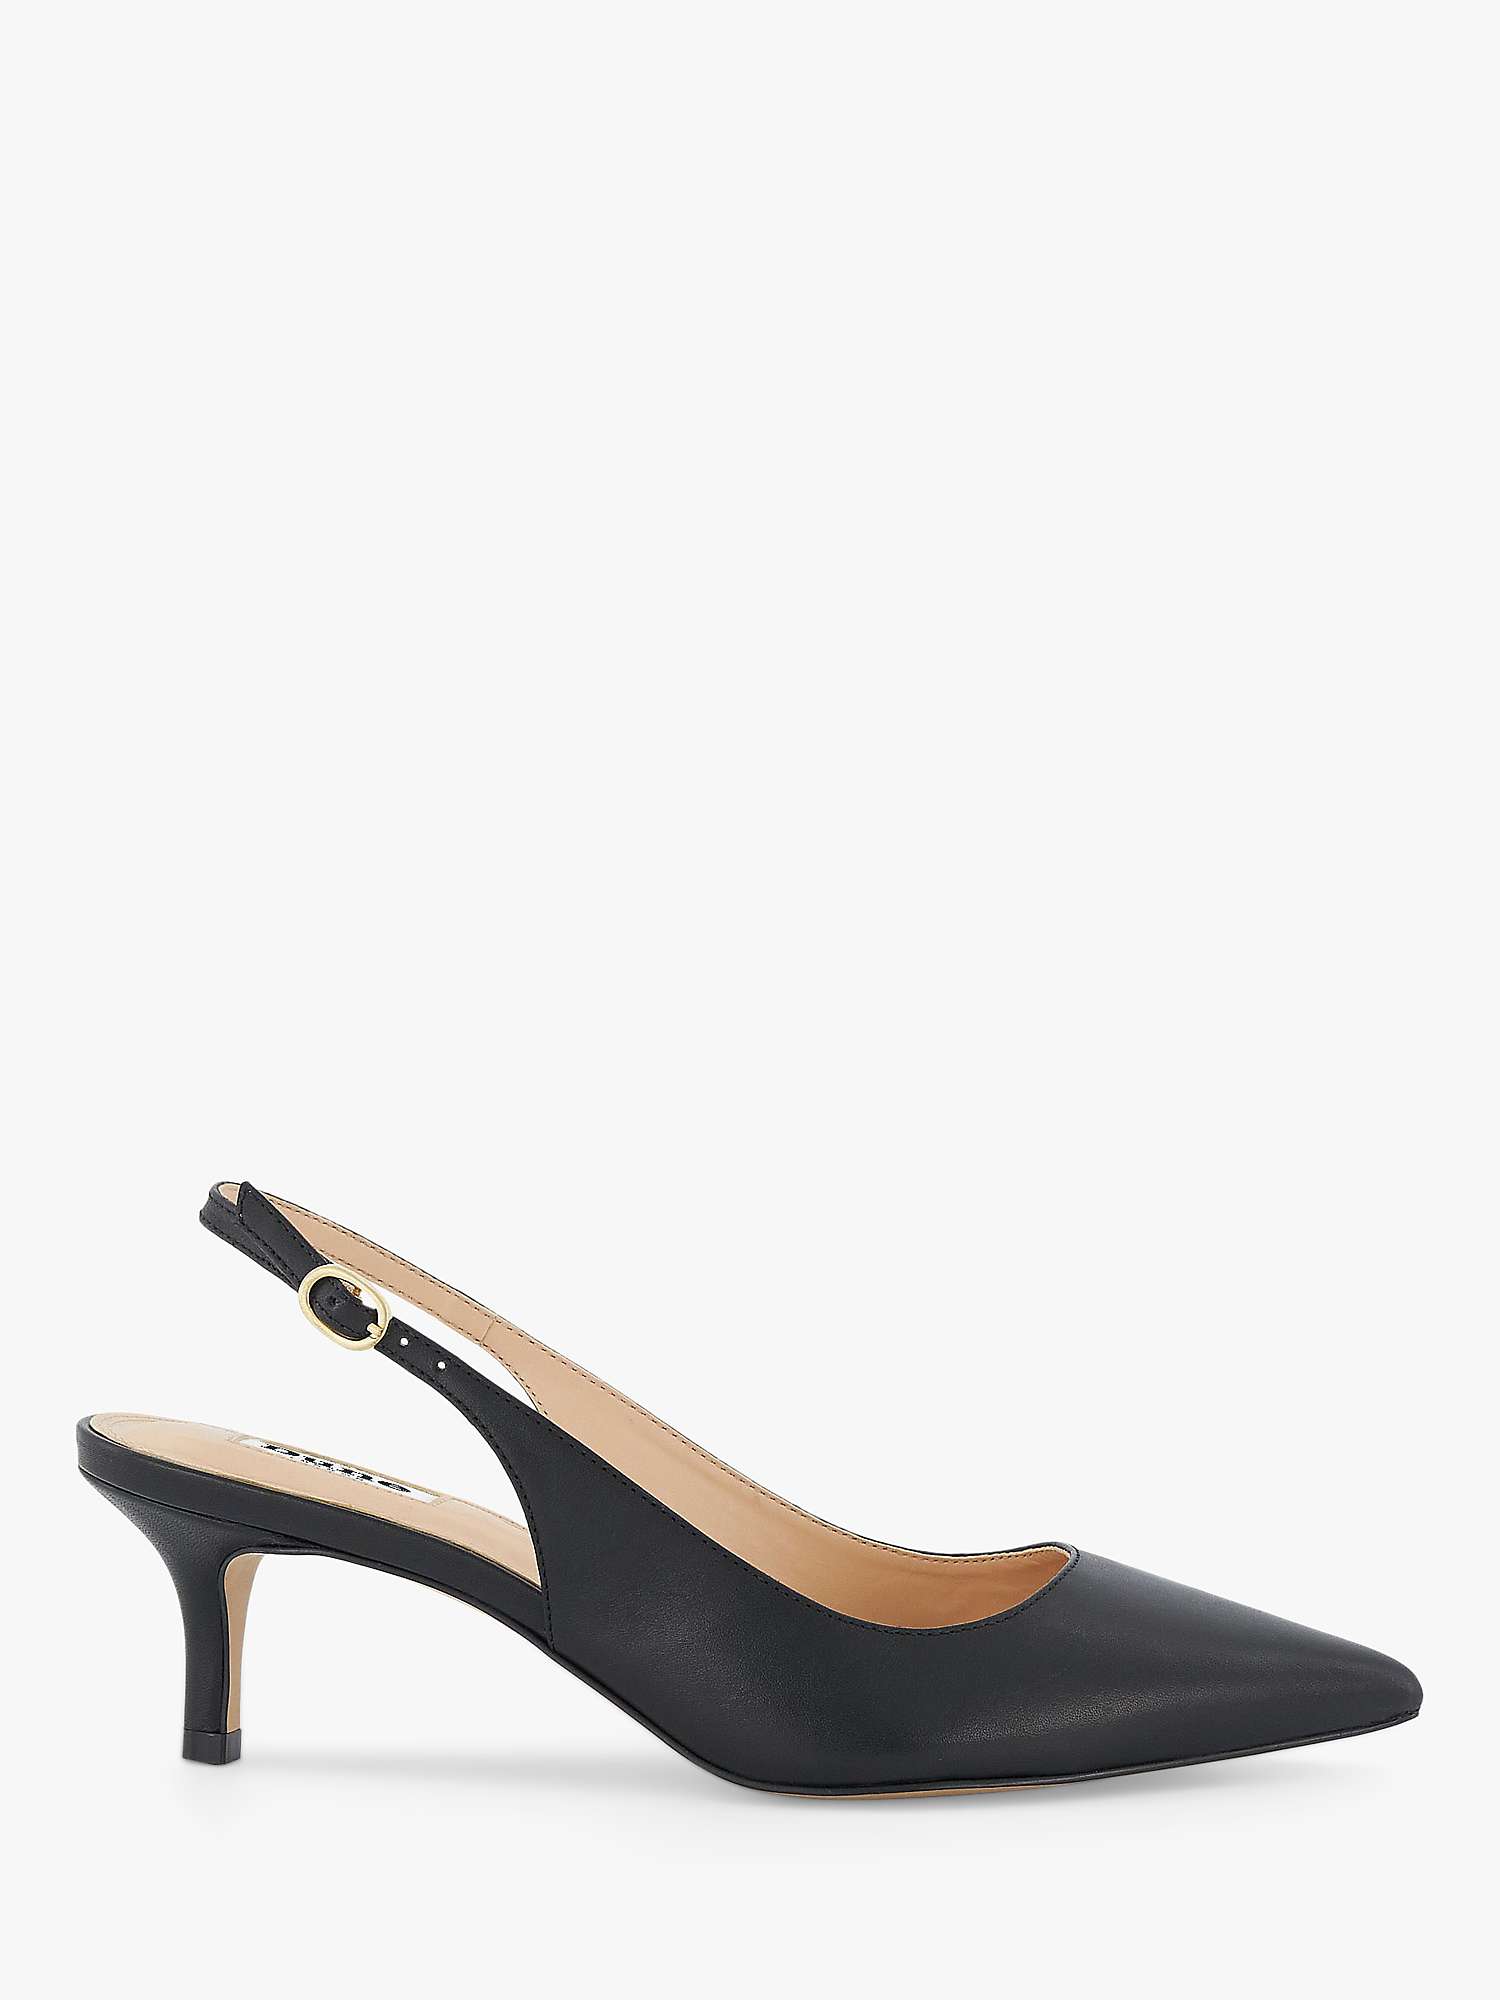 Buy Dune Celini Leather Court Shoes, Black Online at johnlewis.com